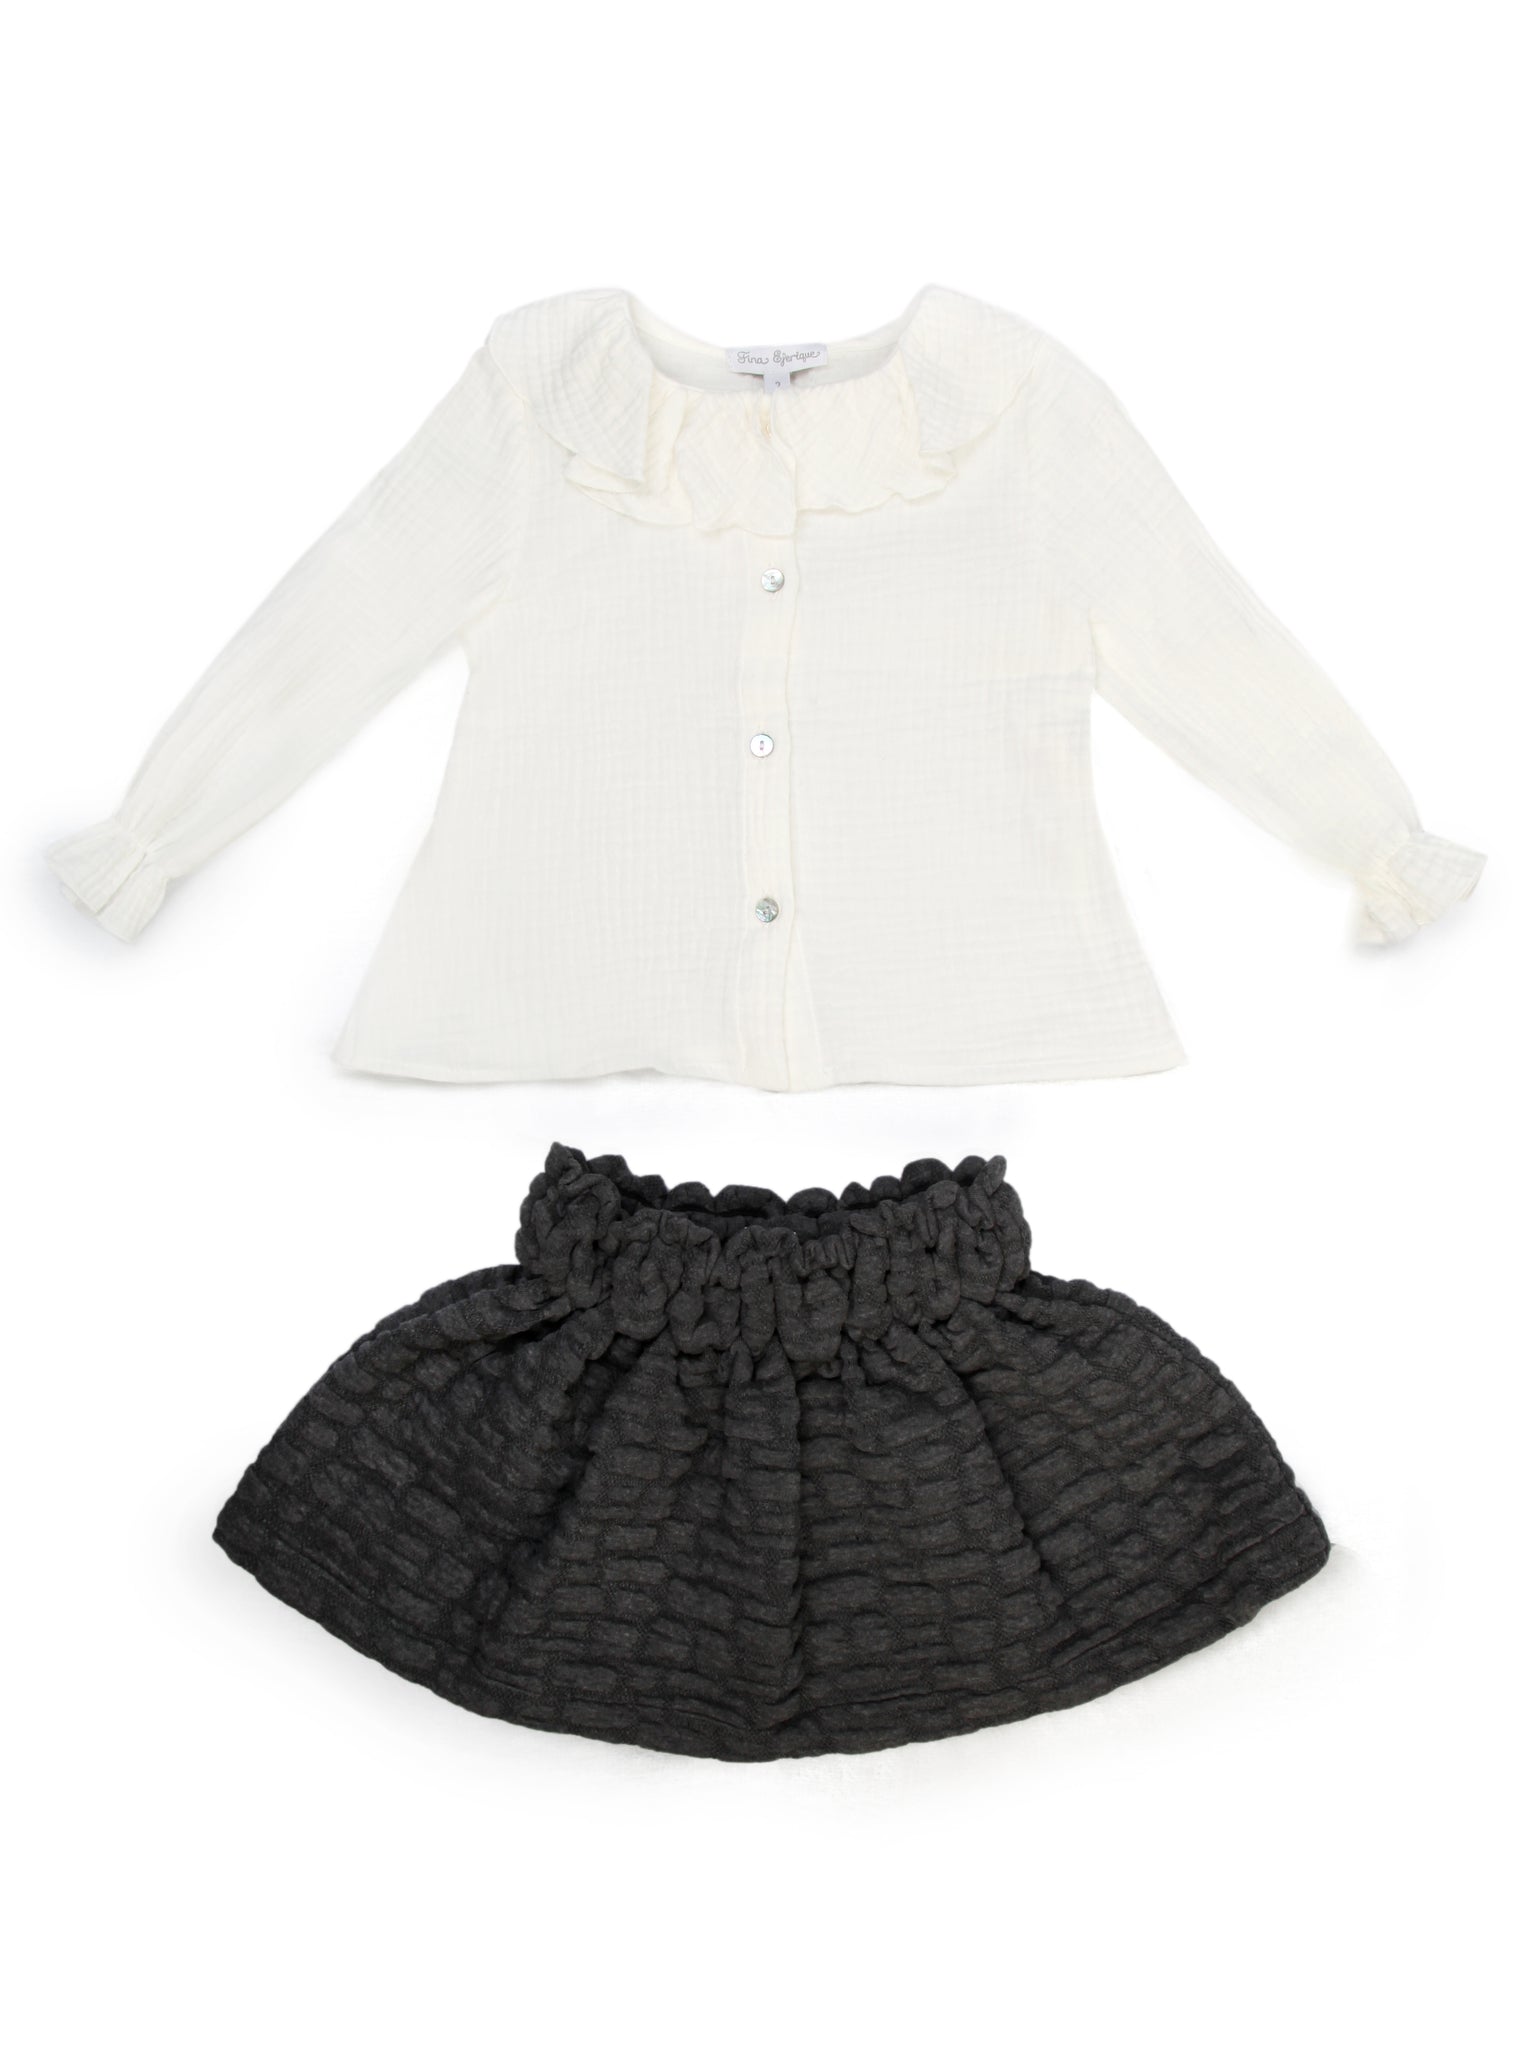 Grey & White Skirt Set